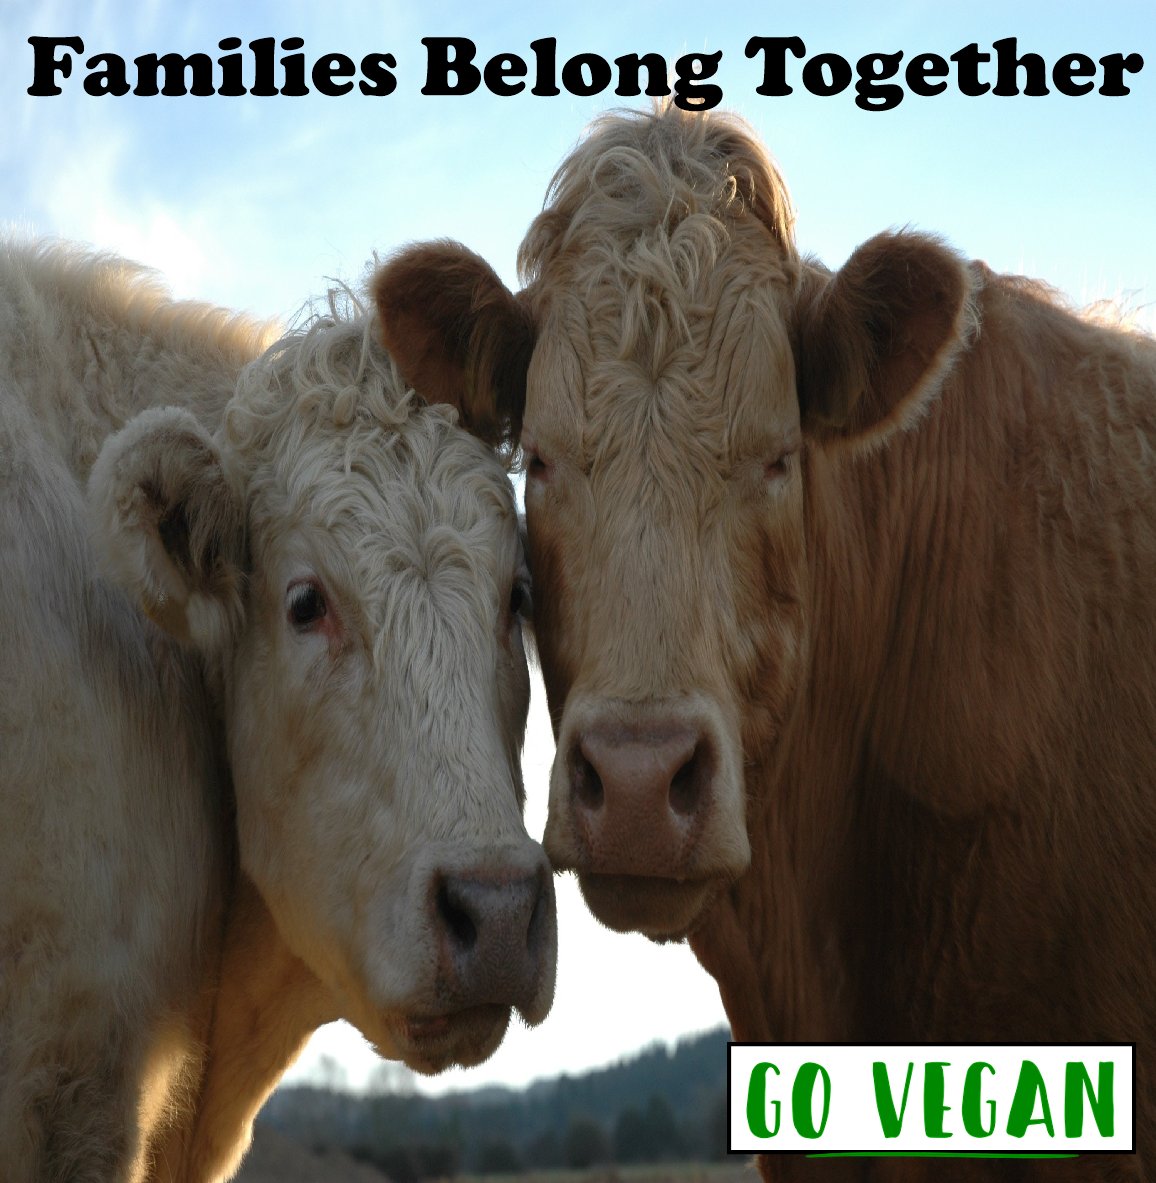 #familiesbelongtogether #keepfamiliestogether #families #together #pictures #govegan